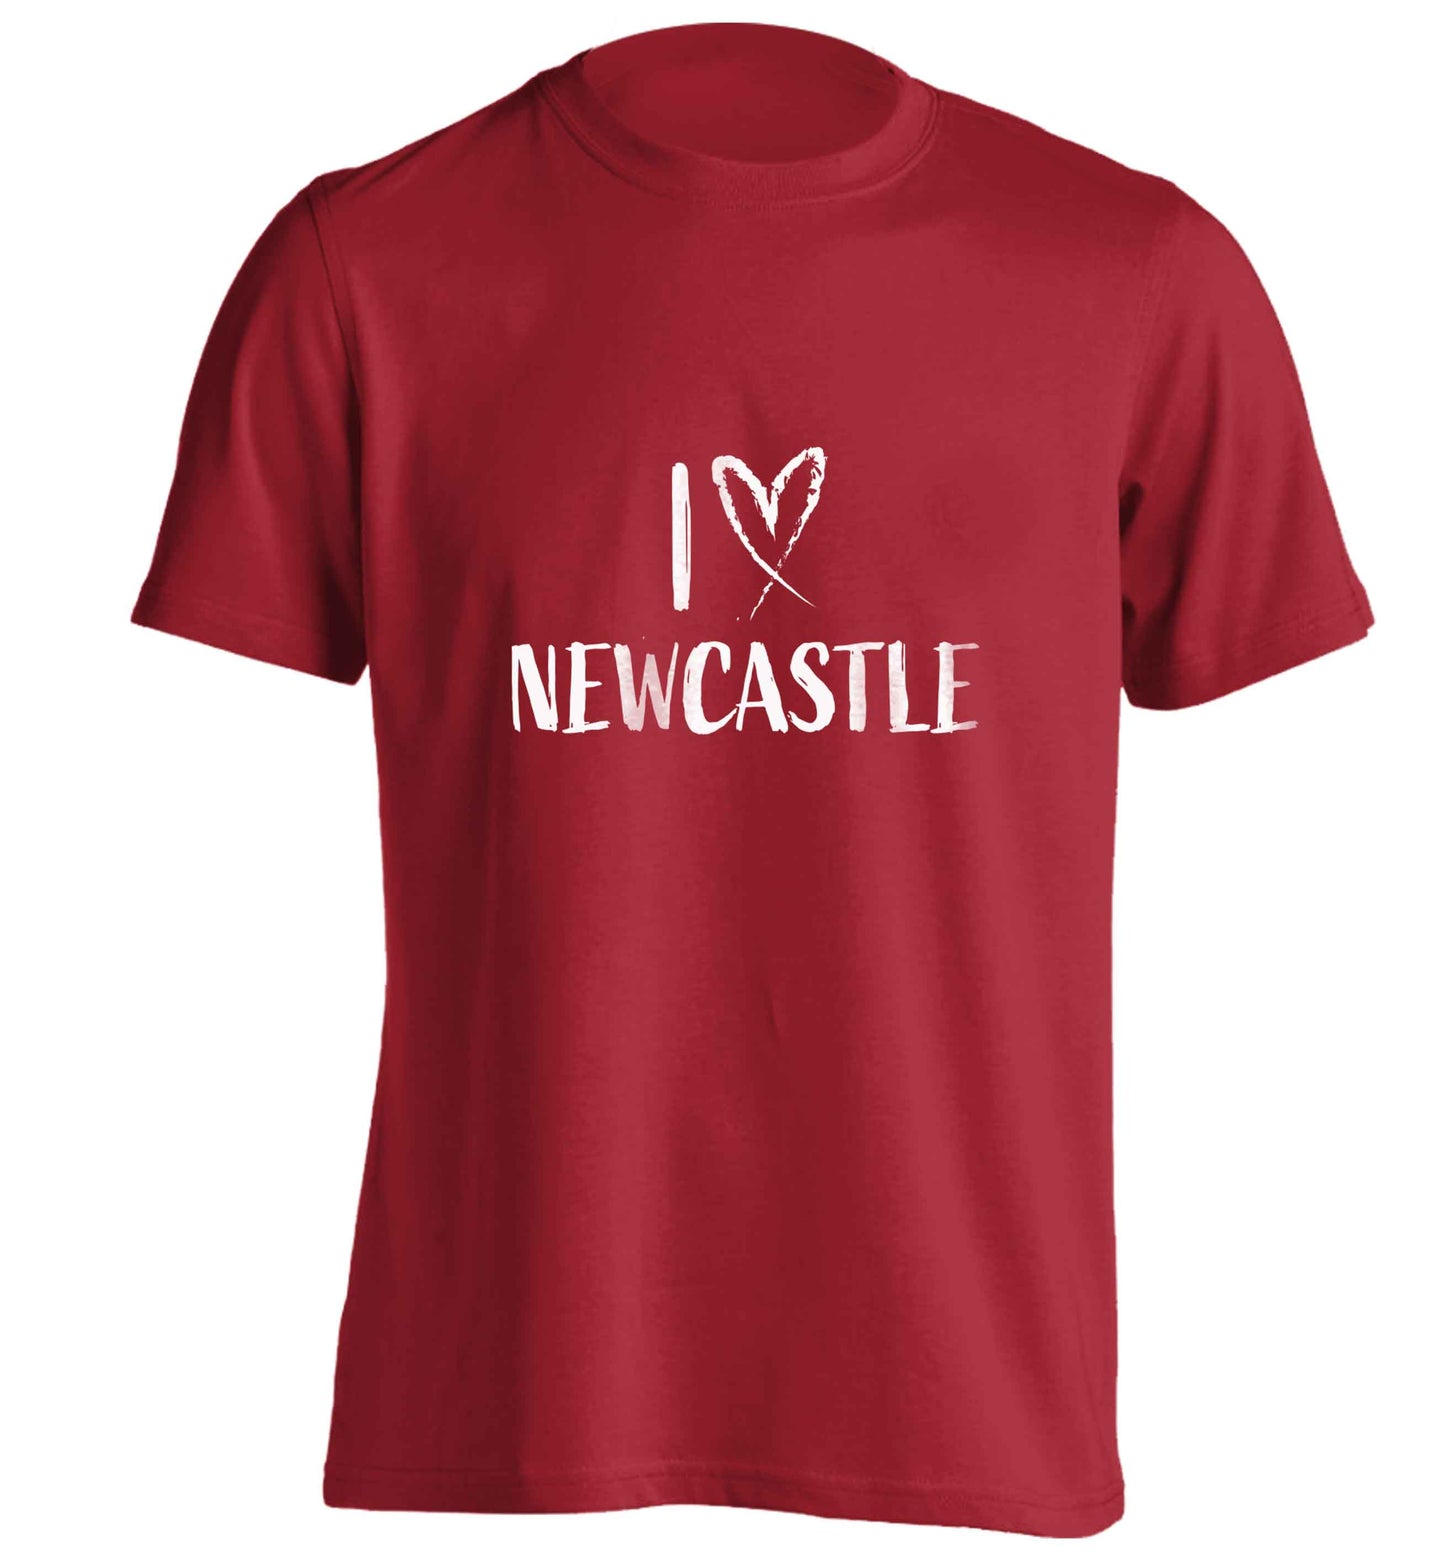 I love Newcastle adults unisex red Tshirt 2XL